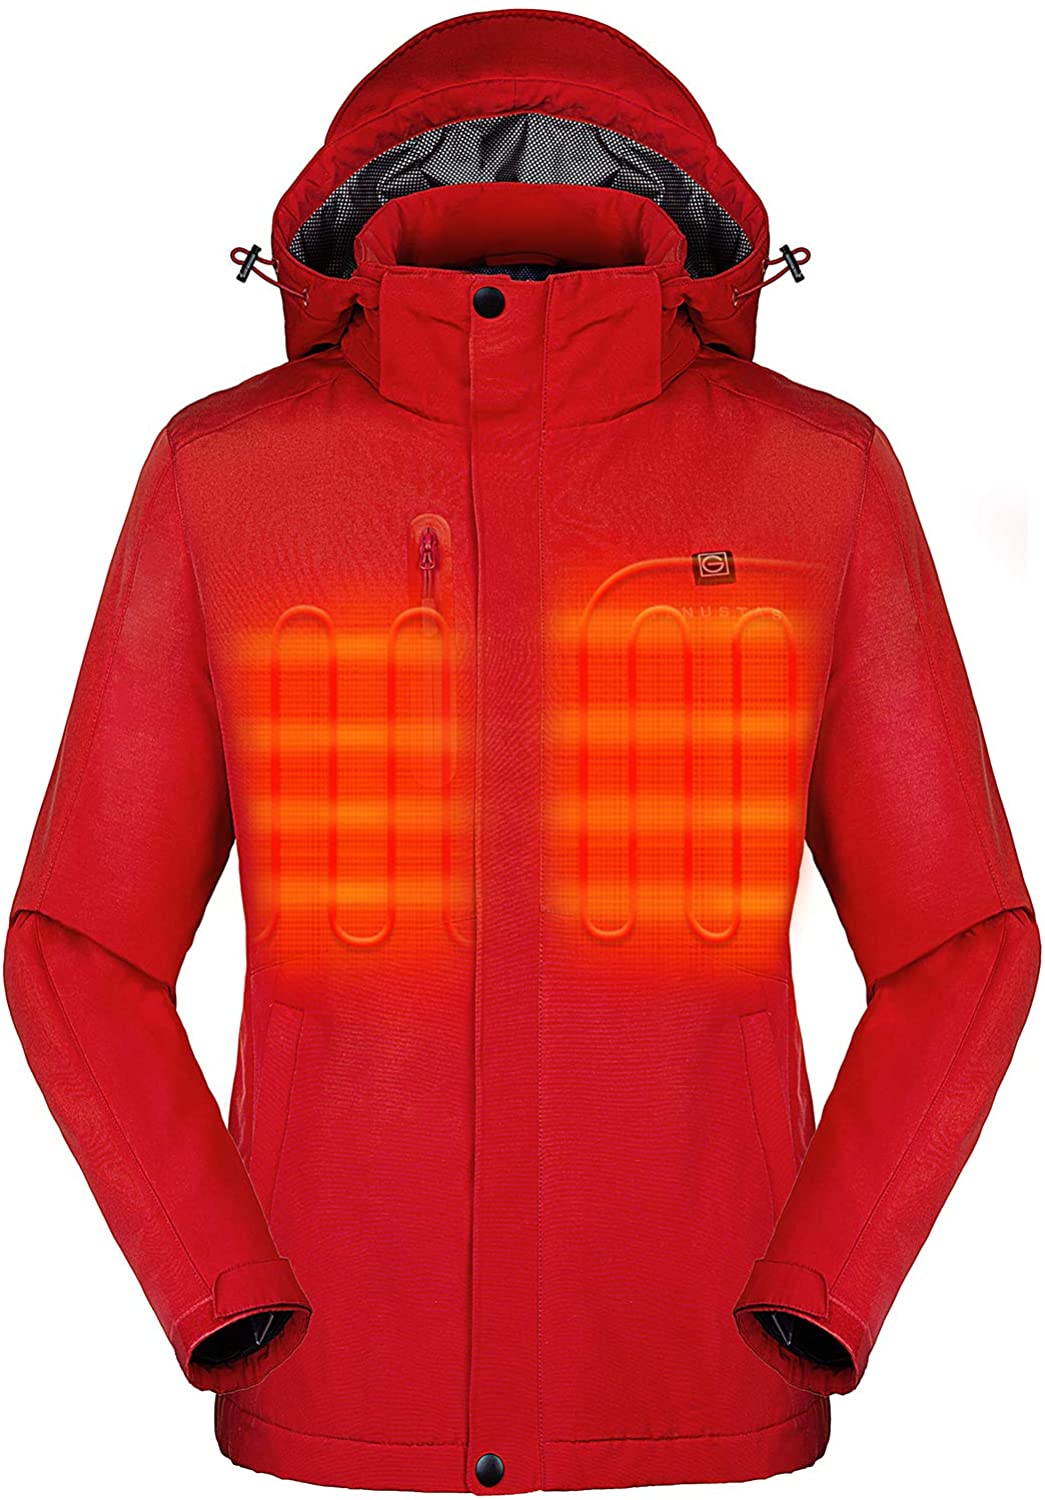 Venustas Womens Fleece Heated Jacket with Battery Pack 7.4V Fleece Heated Coat with YKK Zippers